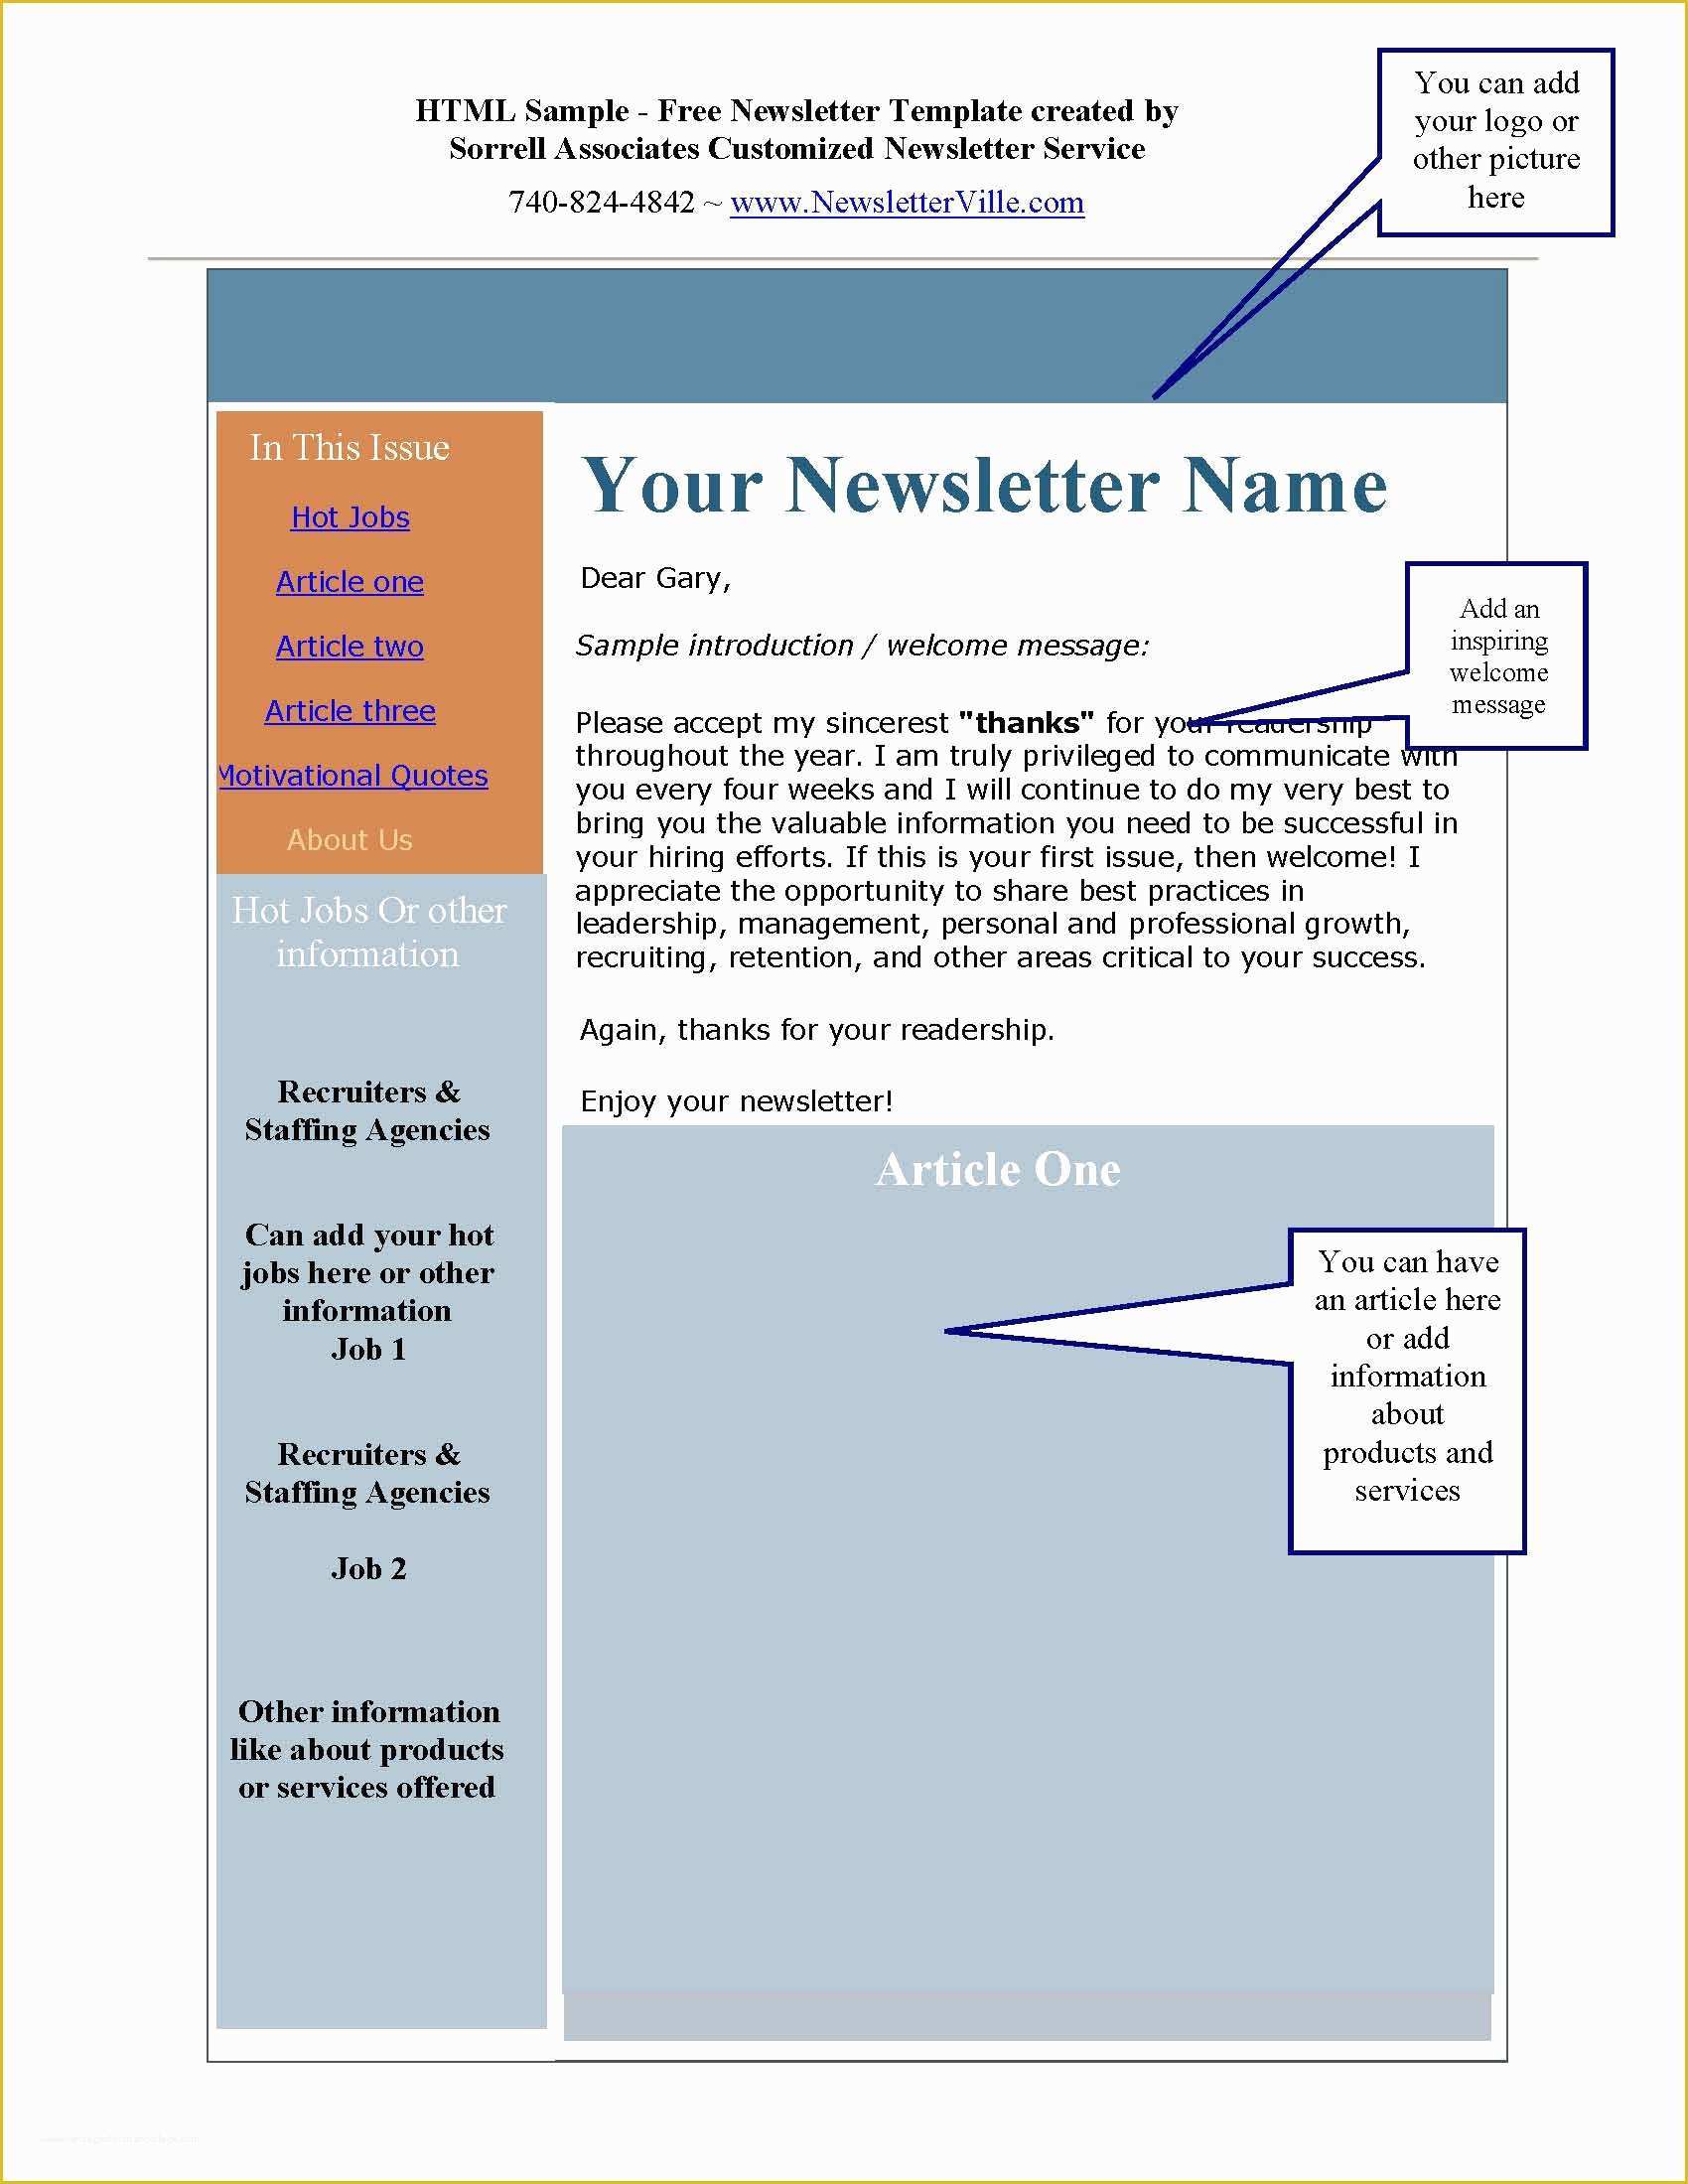 Free Newsletter Template HTML Of Newsletter & Blog Articles Provided Plus Free Newsletter